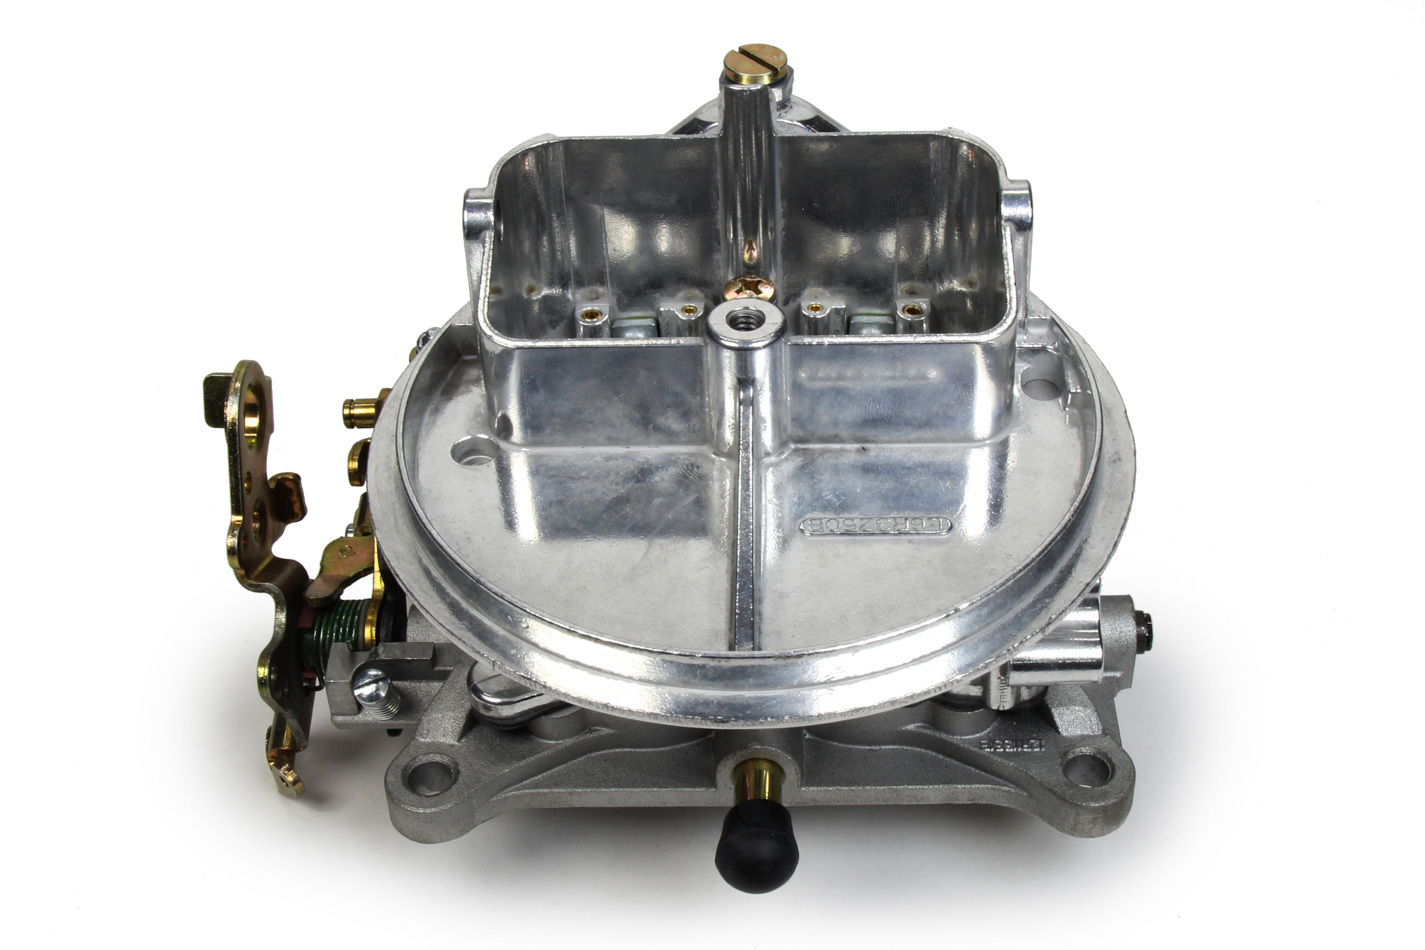 Willys Carb 44120A Carburetor, Circle Track, 2-Barrel, 500 CFM, Holley Flange, No Choke, Single Inlet, Chromate, Each